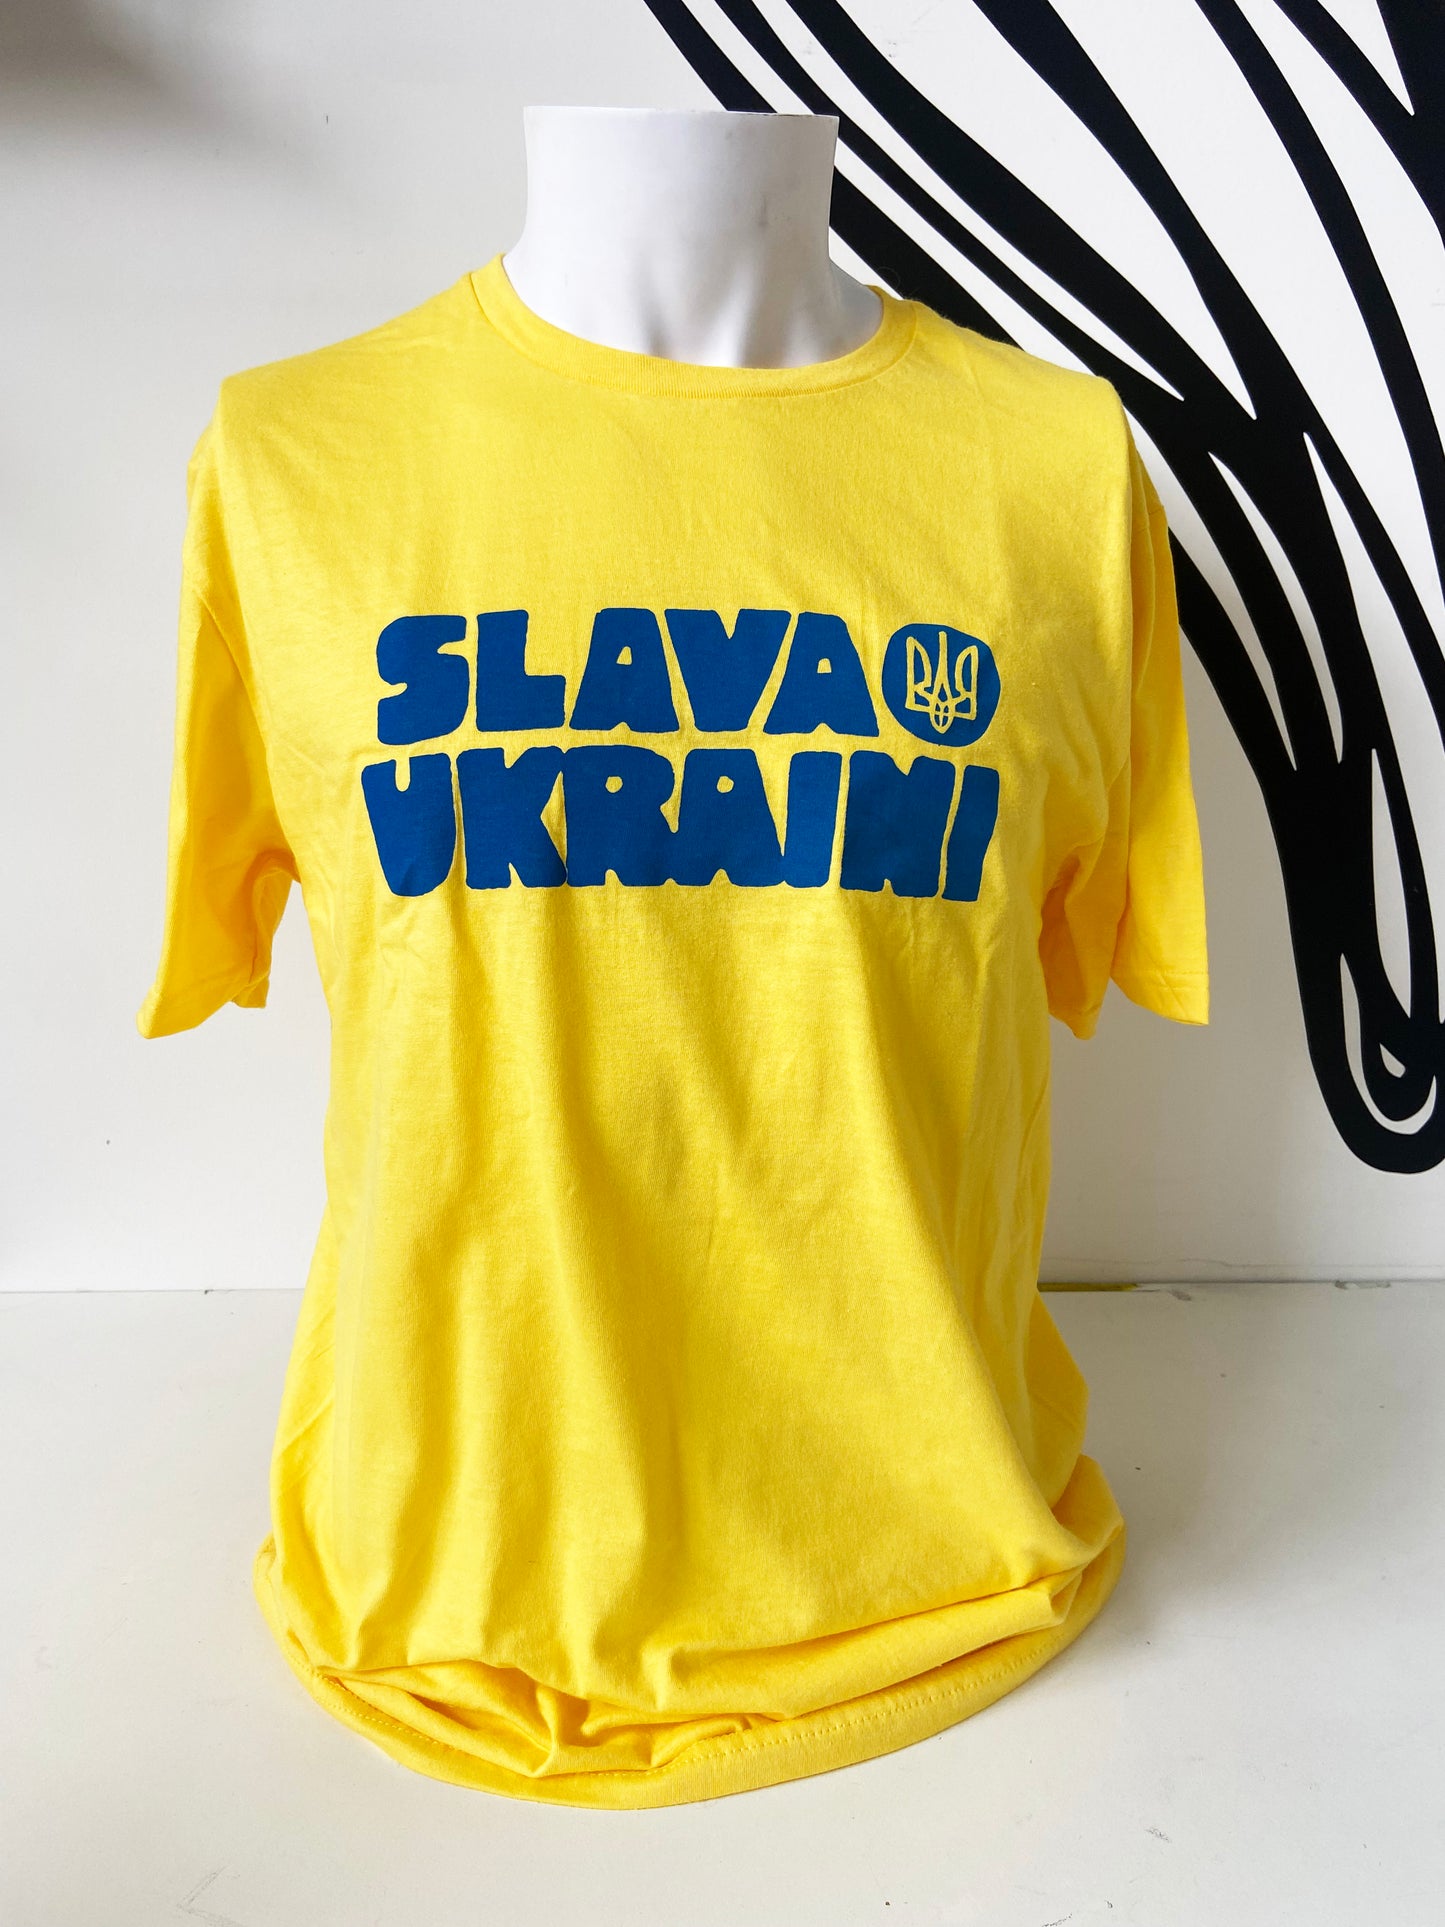 SLAVA UKRAINI Unisex Tee in Support of the Ukraine Crisis - LIMITED EDITION*